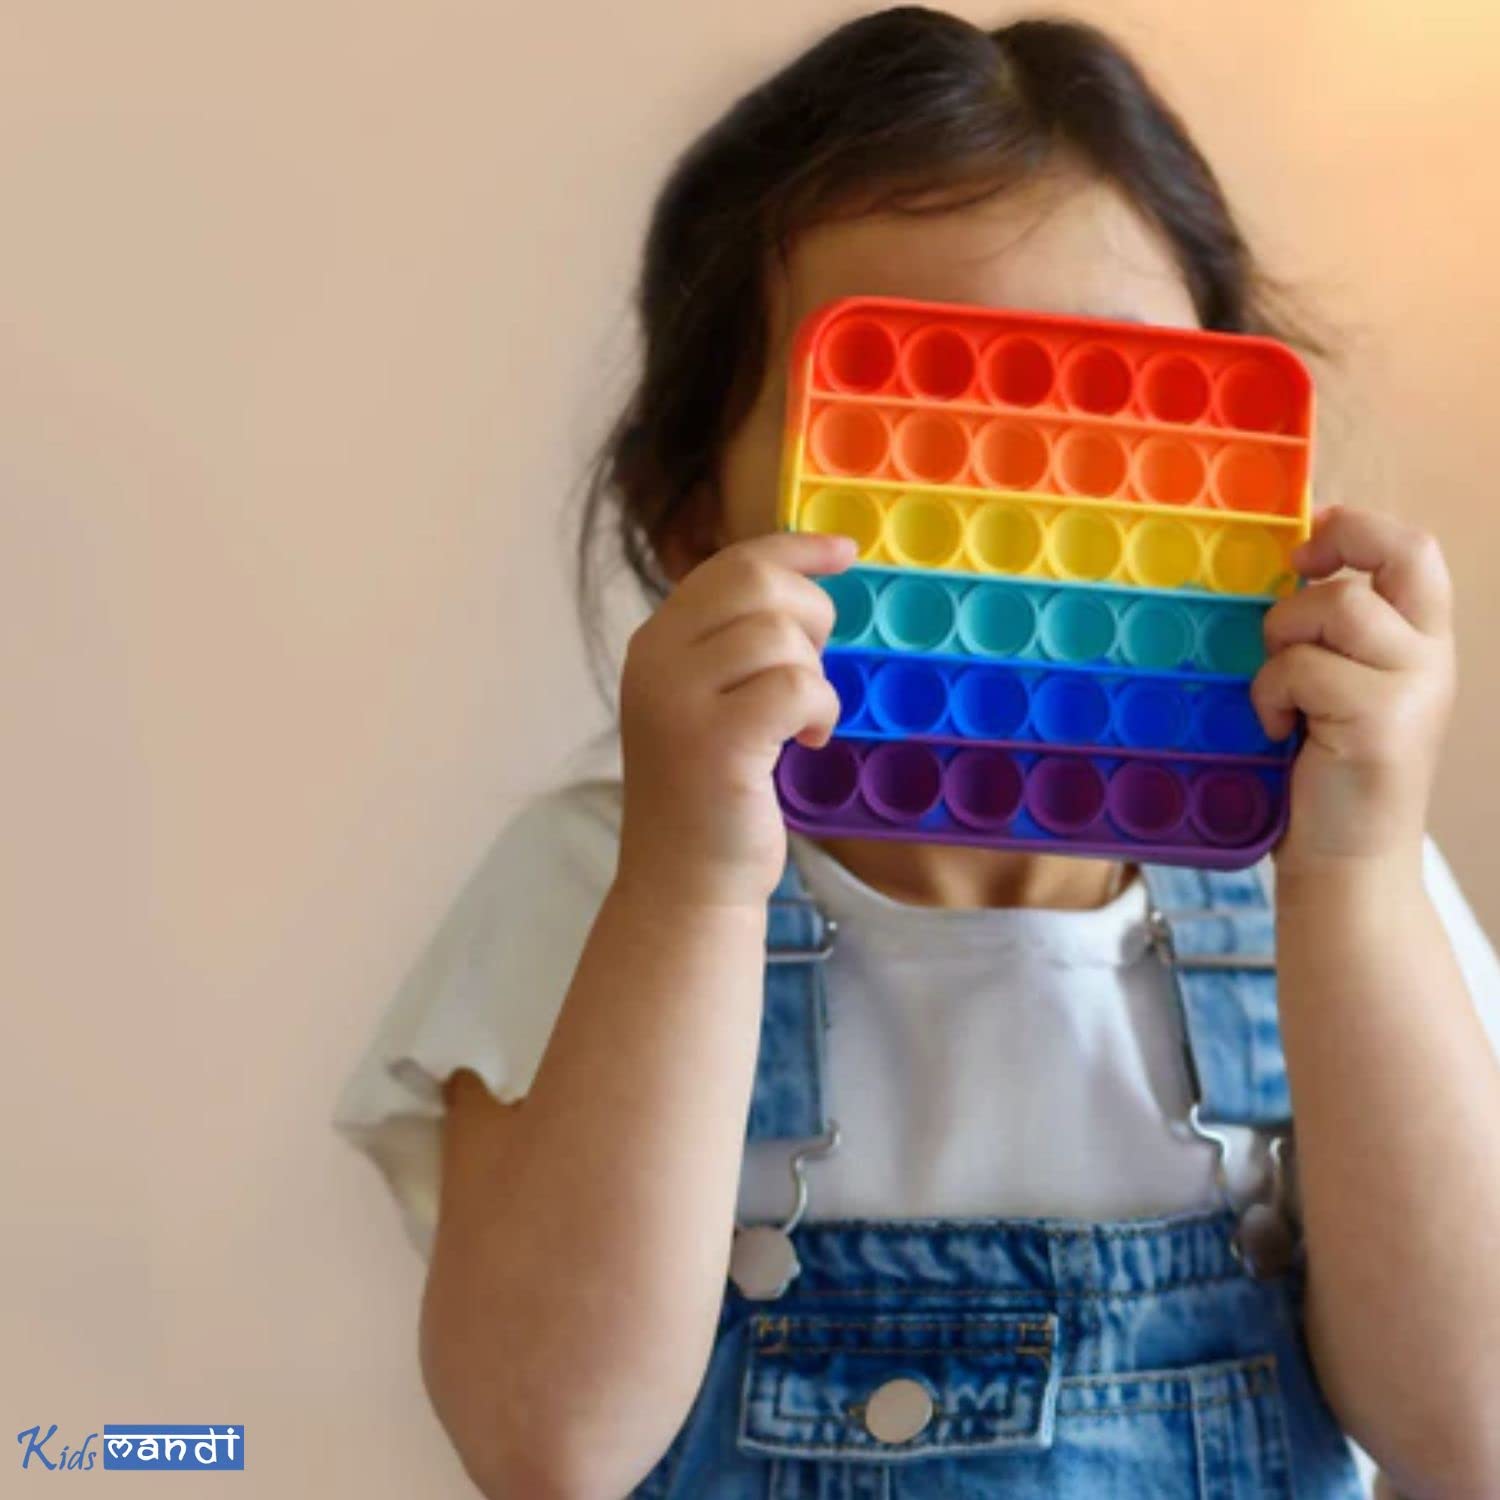 KIDS MANDI rainbow fidget pop-it toy pack squeeze stress-reliever.